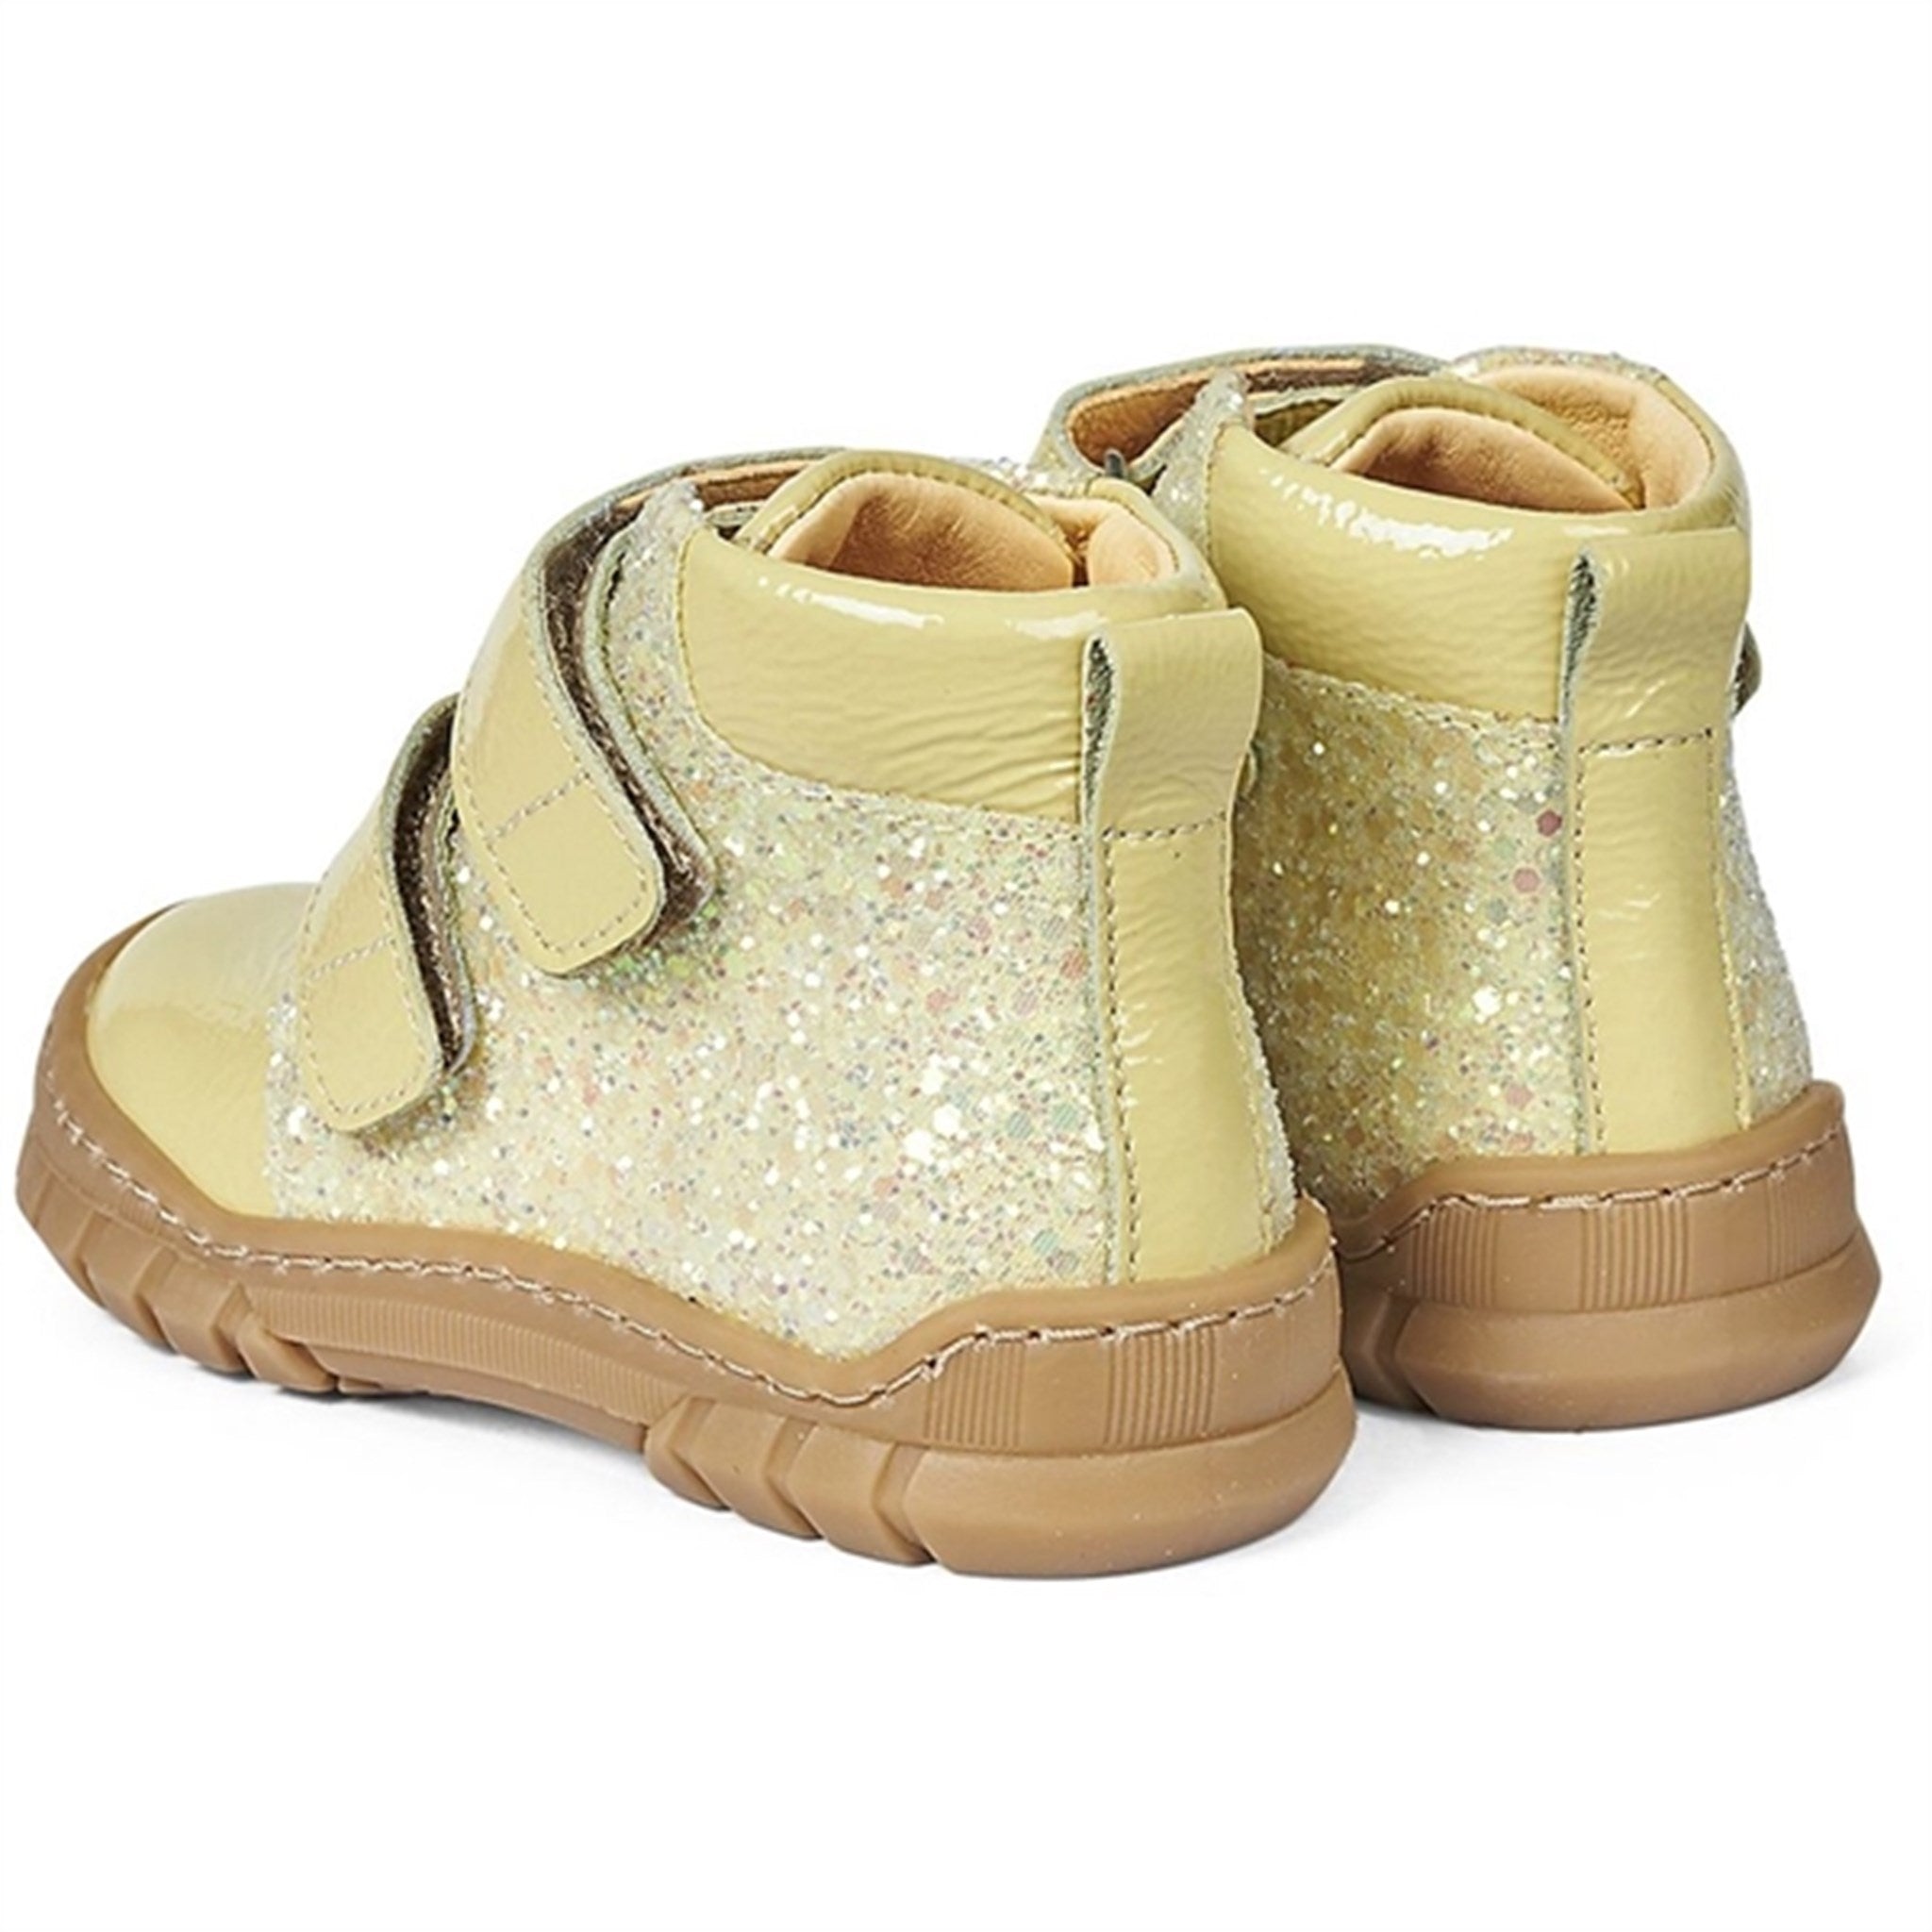 Angulus Starter Shoe W. Velcro And Glitter Details Light Yellow/Light Yellow Glitter 3